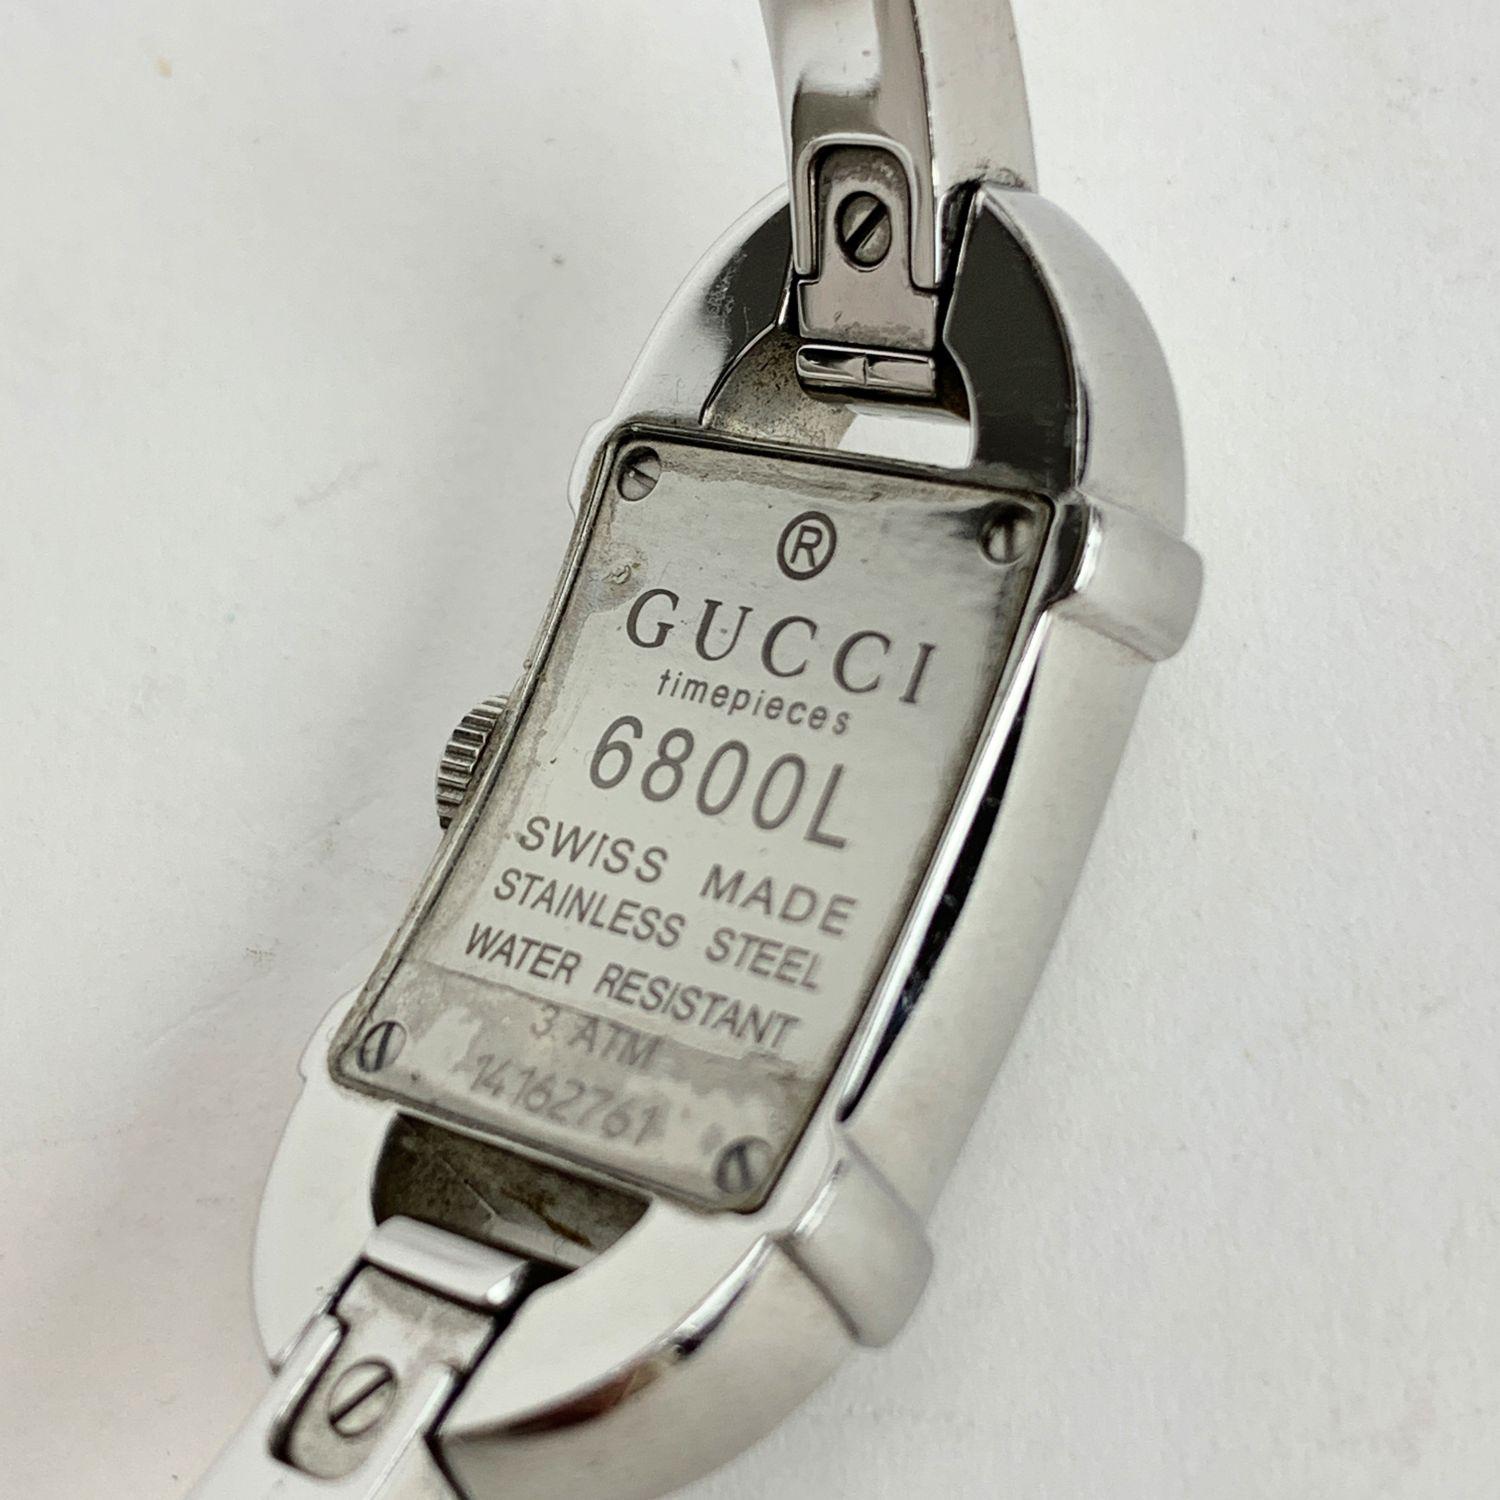 Gucci Stainless Steel Ladies Mod 6800 L Wrist Watch Quartz 2